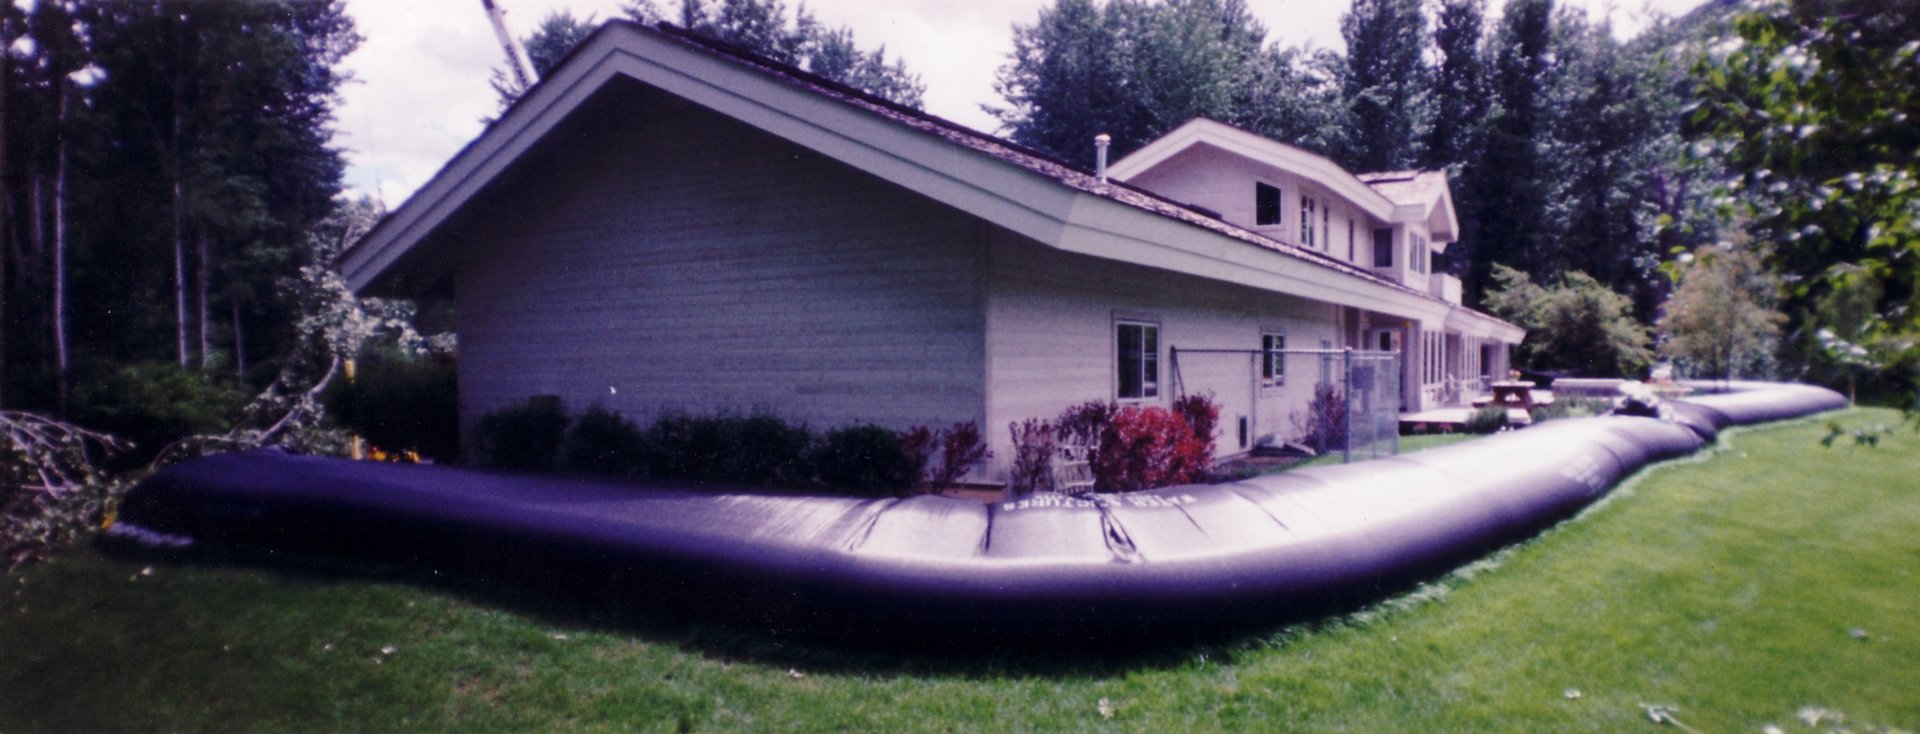 Residential Flood Control Sun Valley, ID 1996